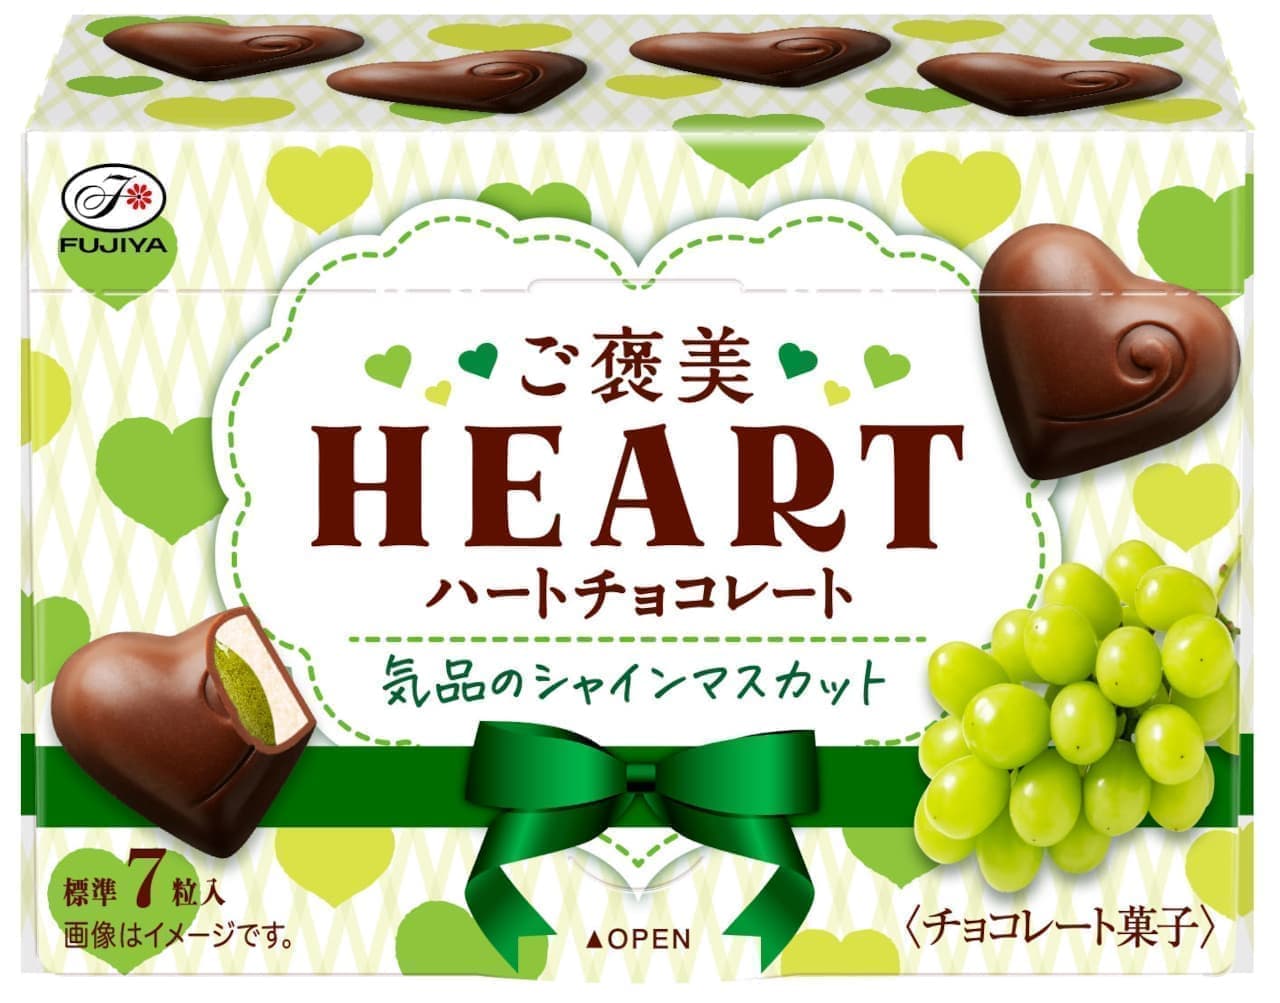 New Chocolate "Reward Heart Chocolate (Noble Shine Muscat)".